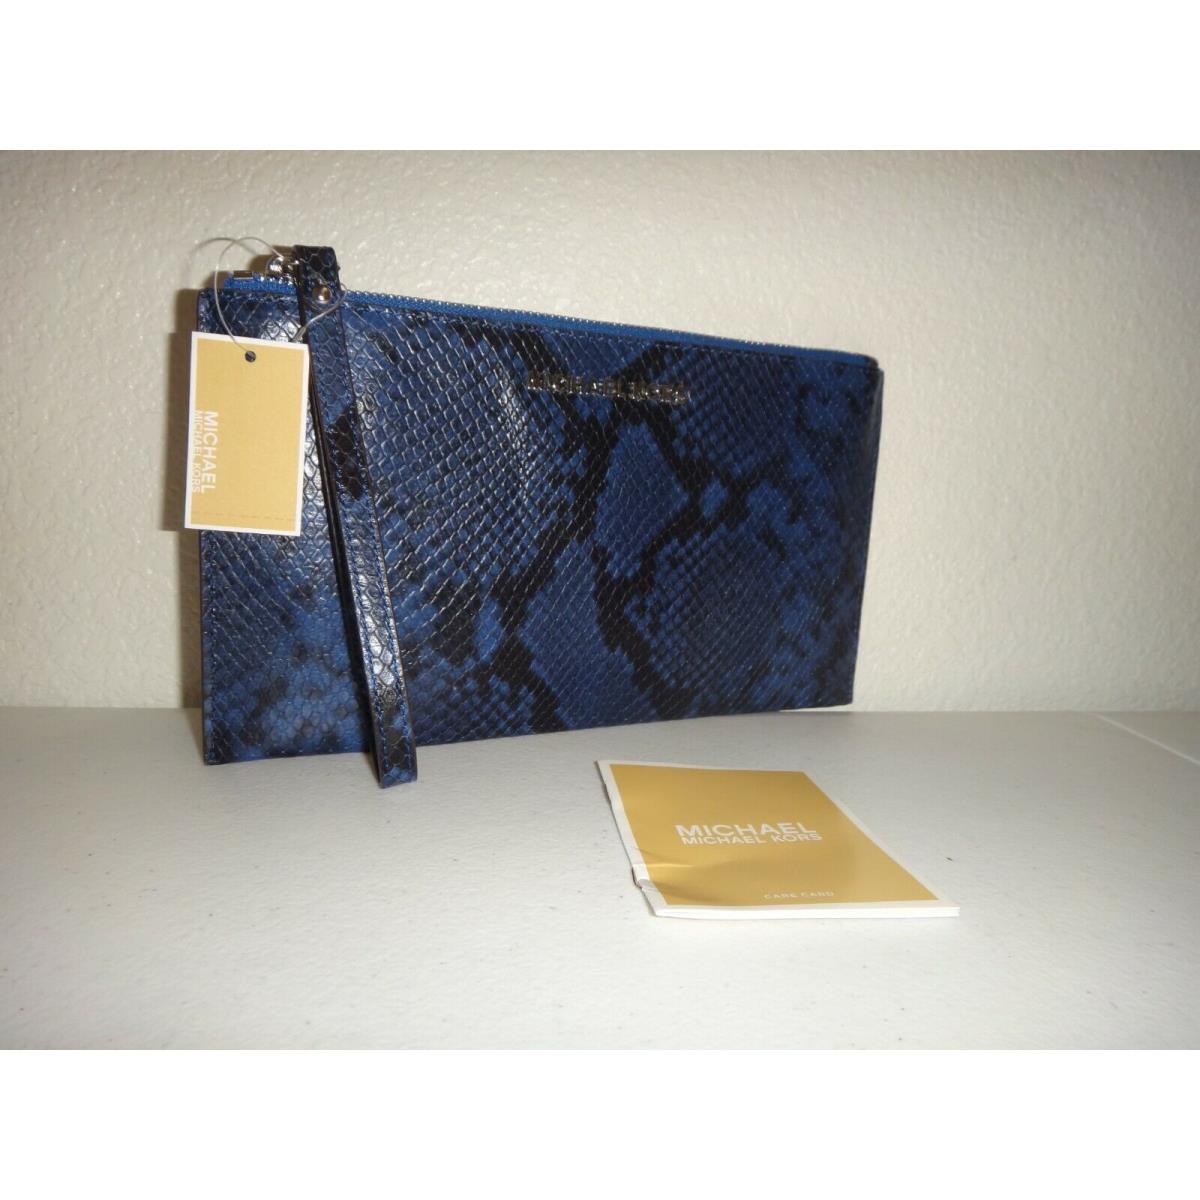 Michael Kors Women Jet Set MK LG Clutch Wristlet Wallet Blue Snake Skin Embossed